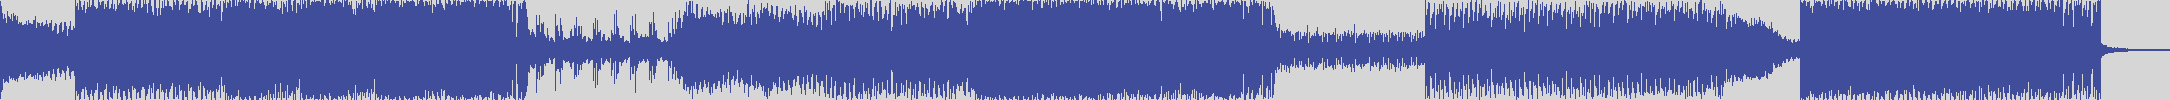 atomic_recordings [AR001] Silva Phunk - Aloha [Club Mix] audio wave form